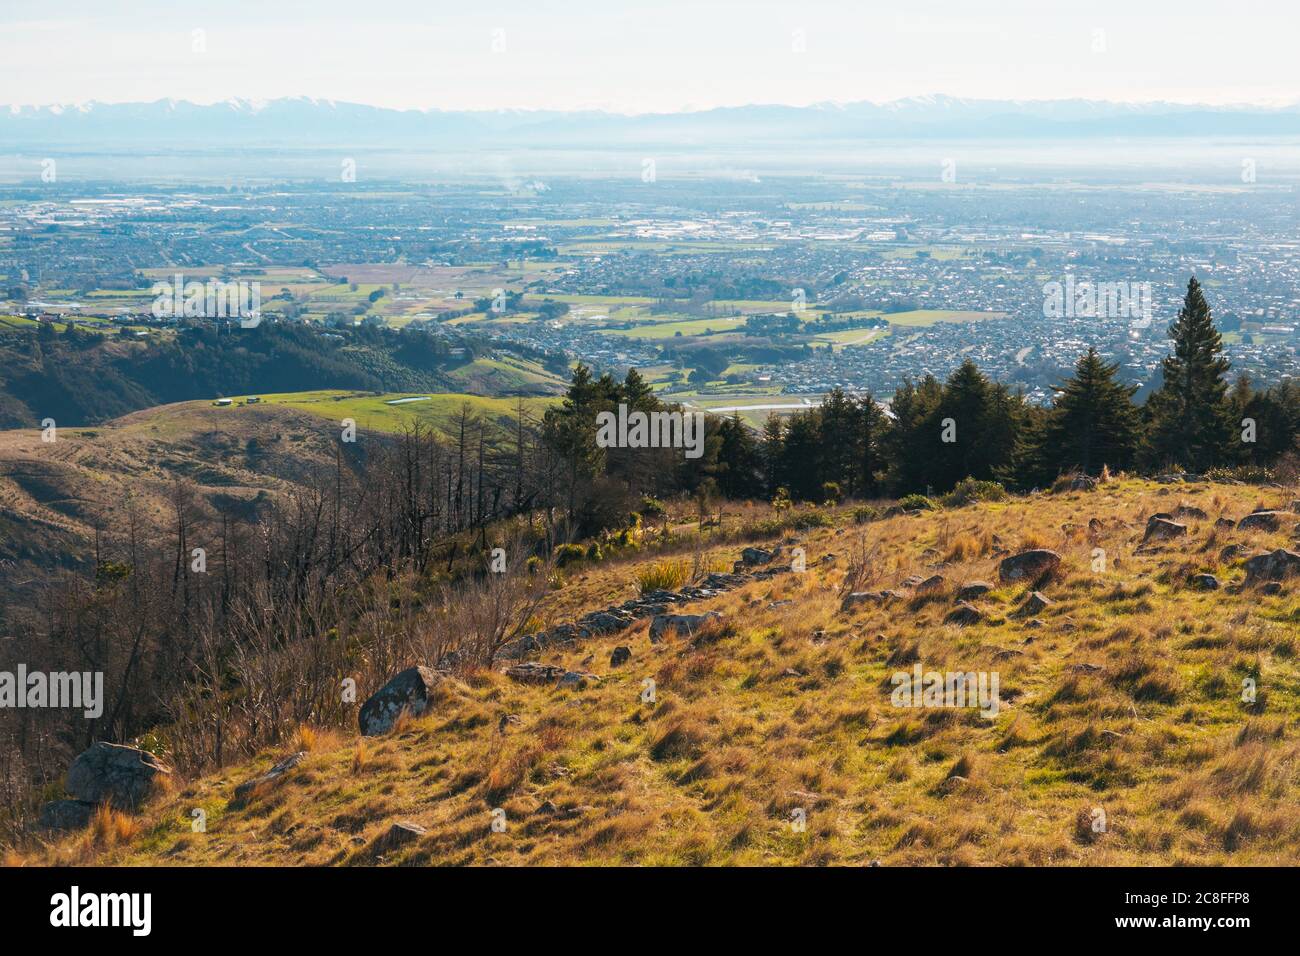 La vista sobre la ciudad de Christchurch vista desde la reserva escénica Thomson, Port Hills, Nueva Zelanda Foto de stock